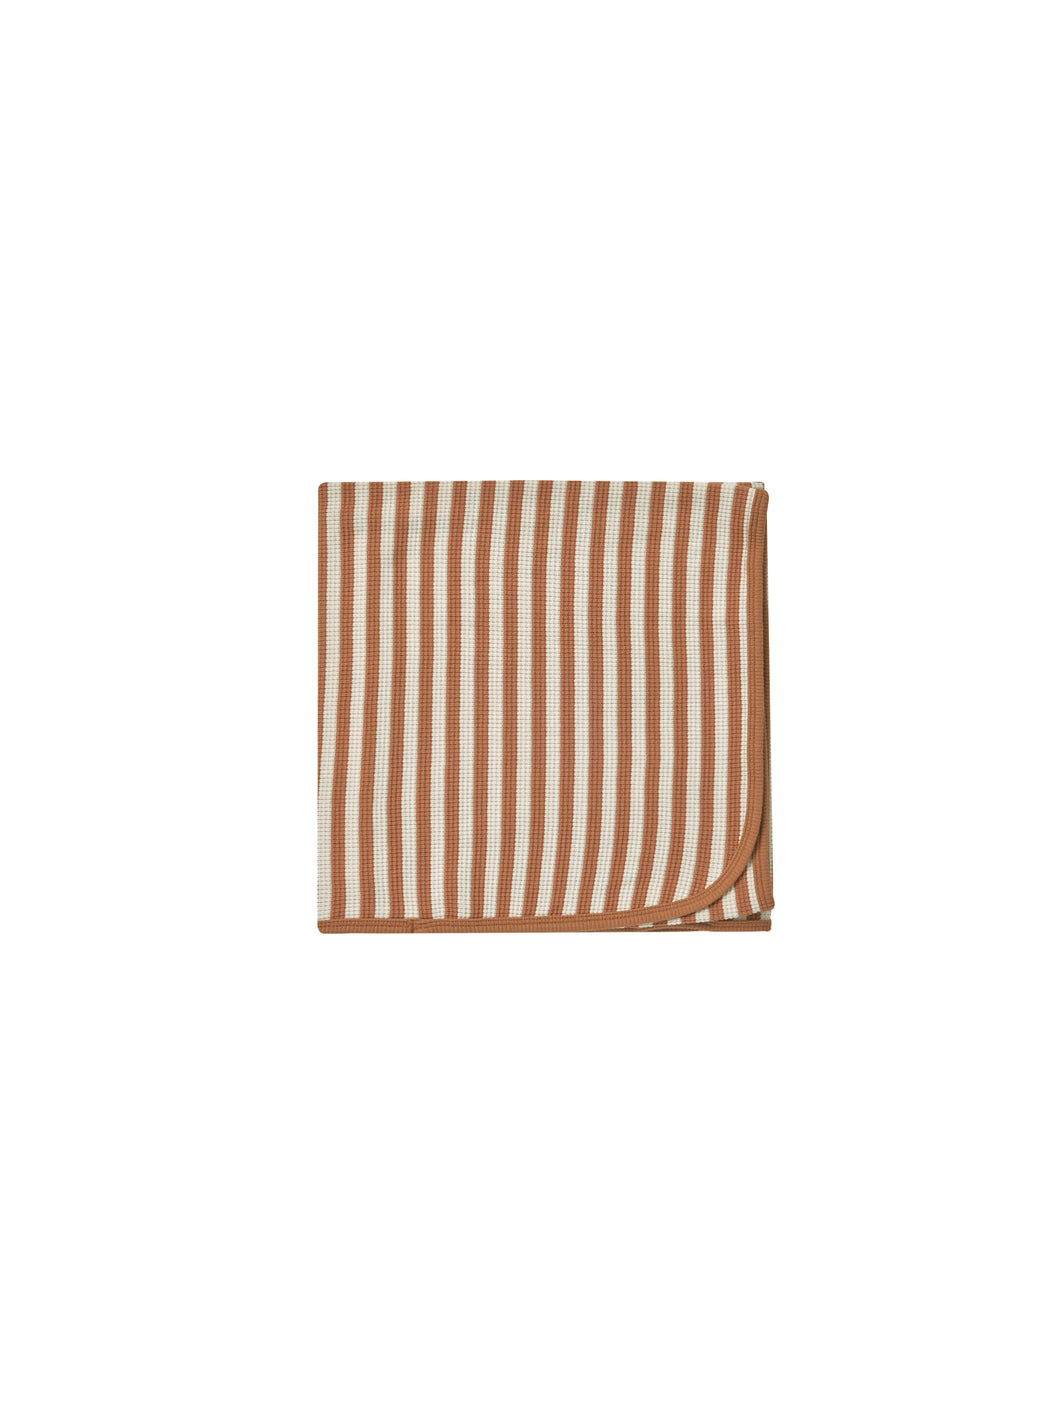 Clay Stripe Baby Blanket